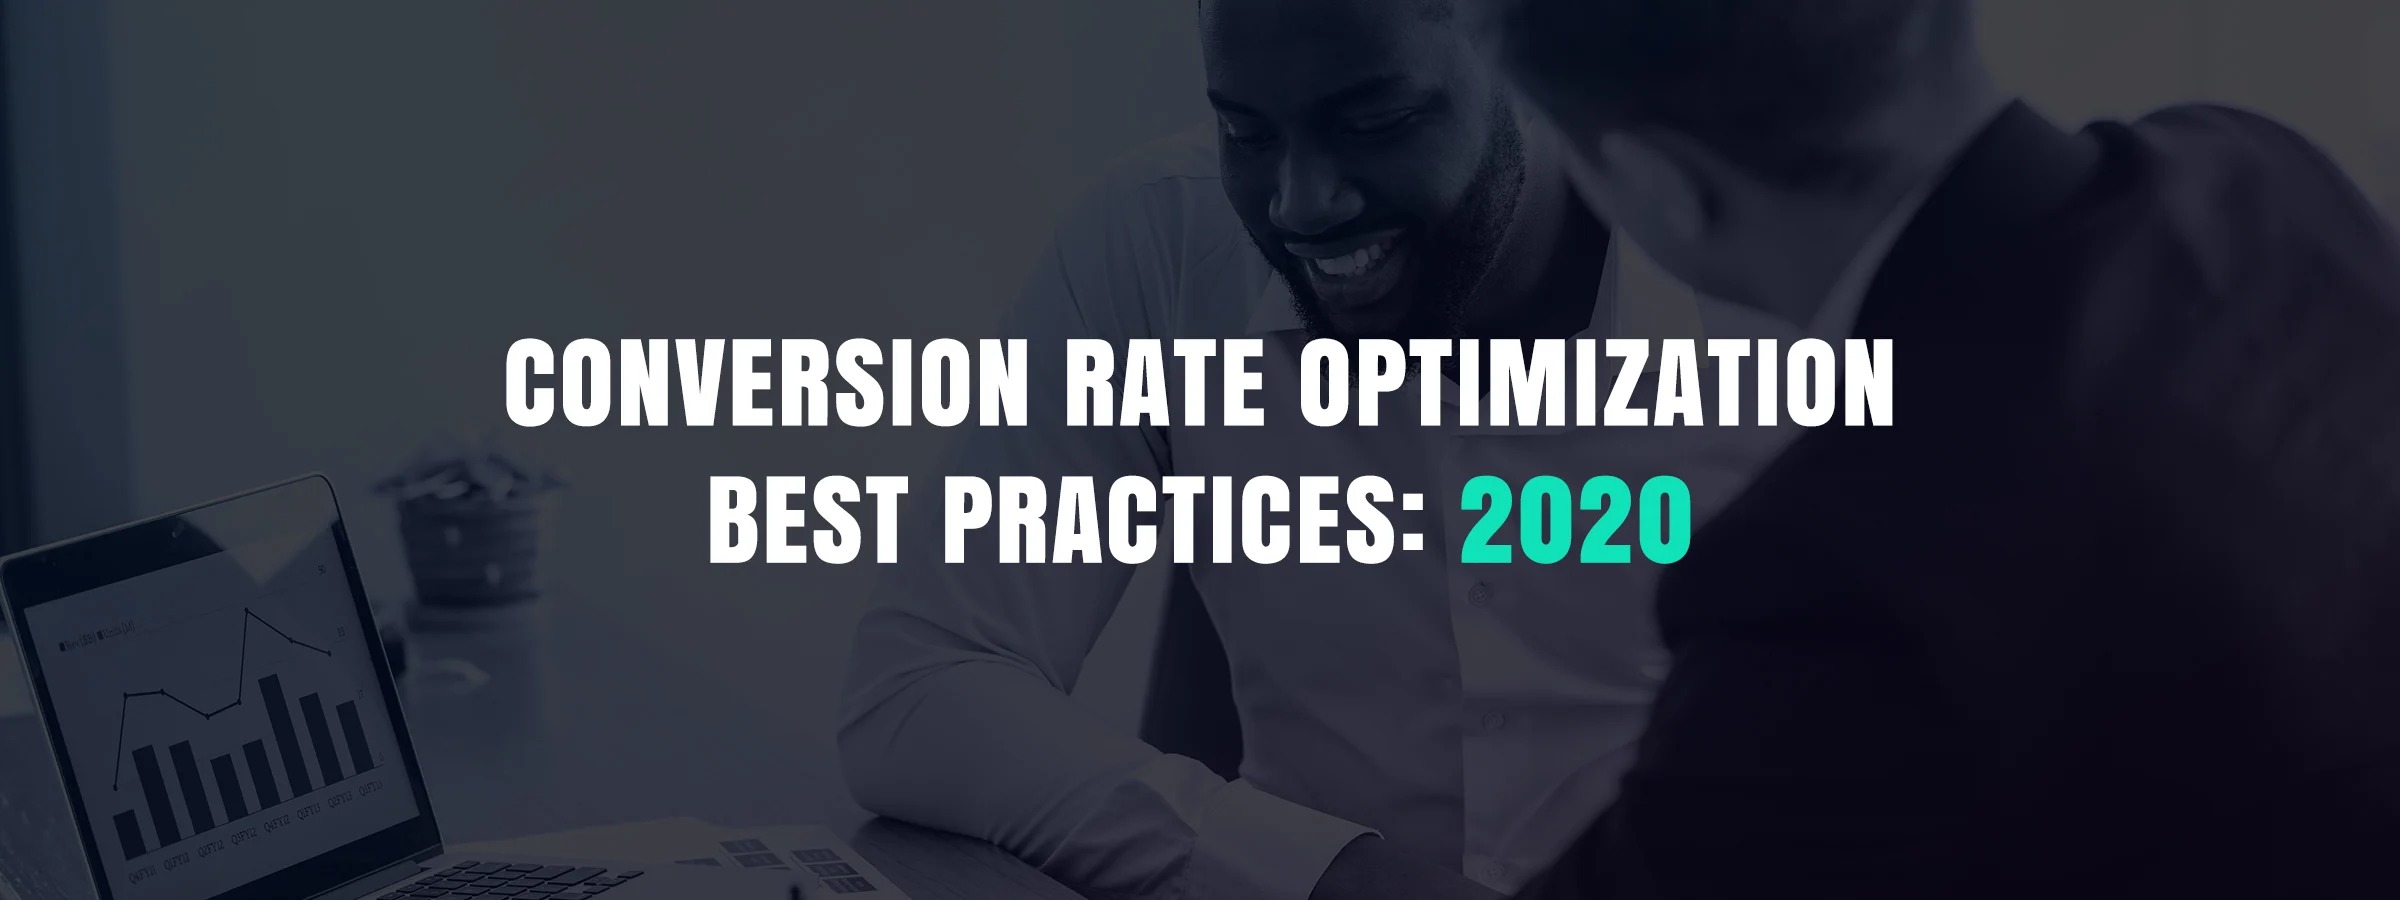 Conversion rate optimization best practices: 2020